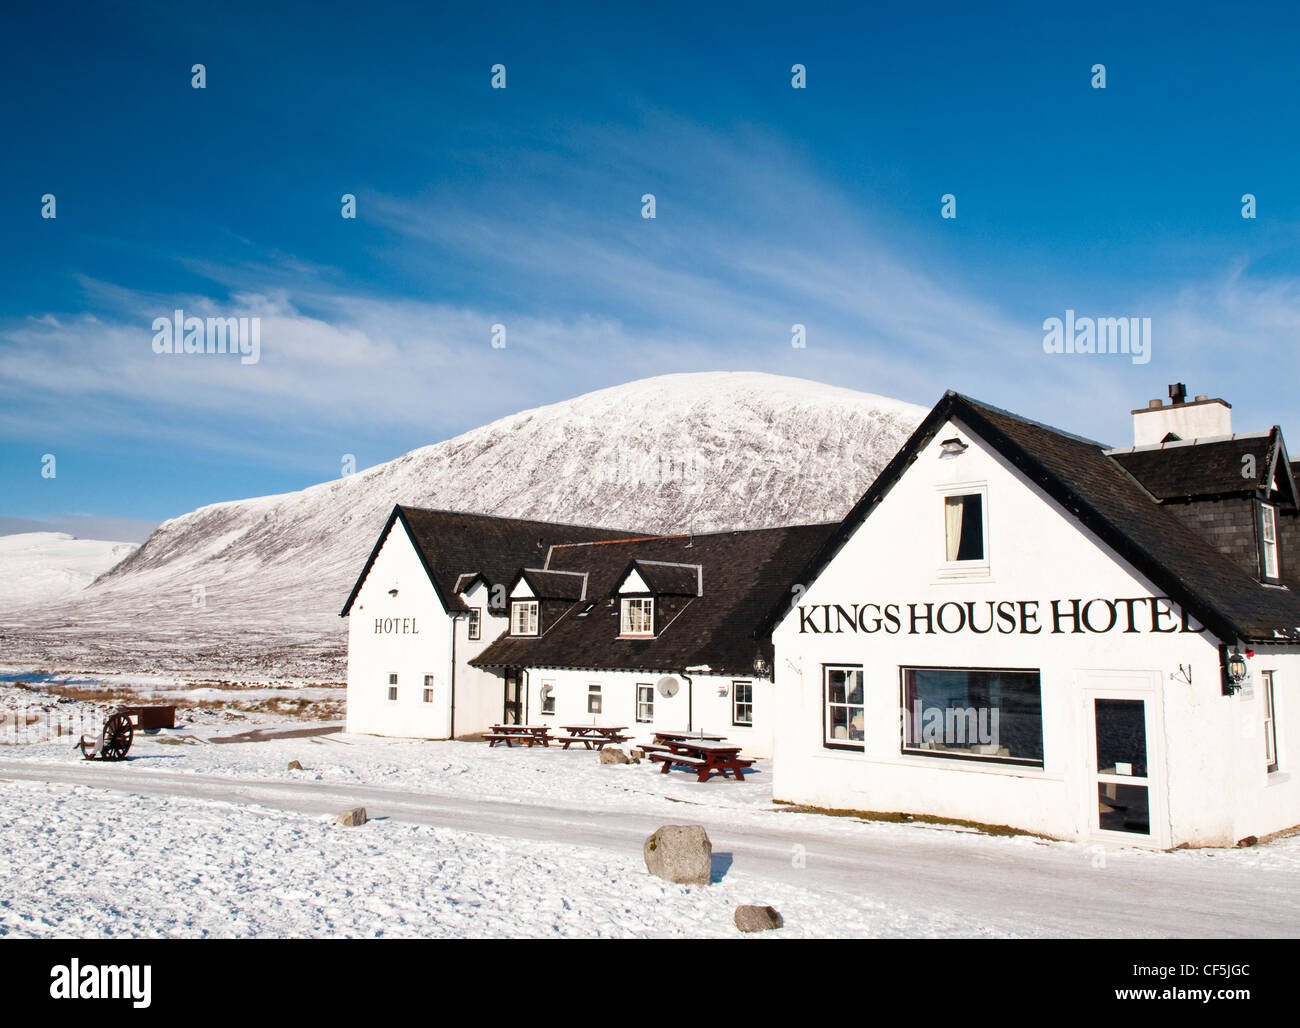 Kings House Hotel en el remoto paisaje cubierto de nieve en Glencoe. Foto de stock